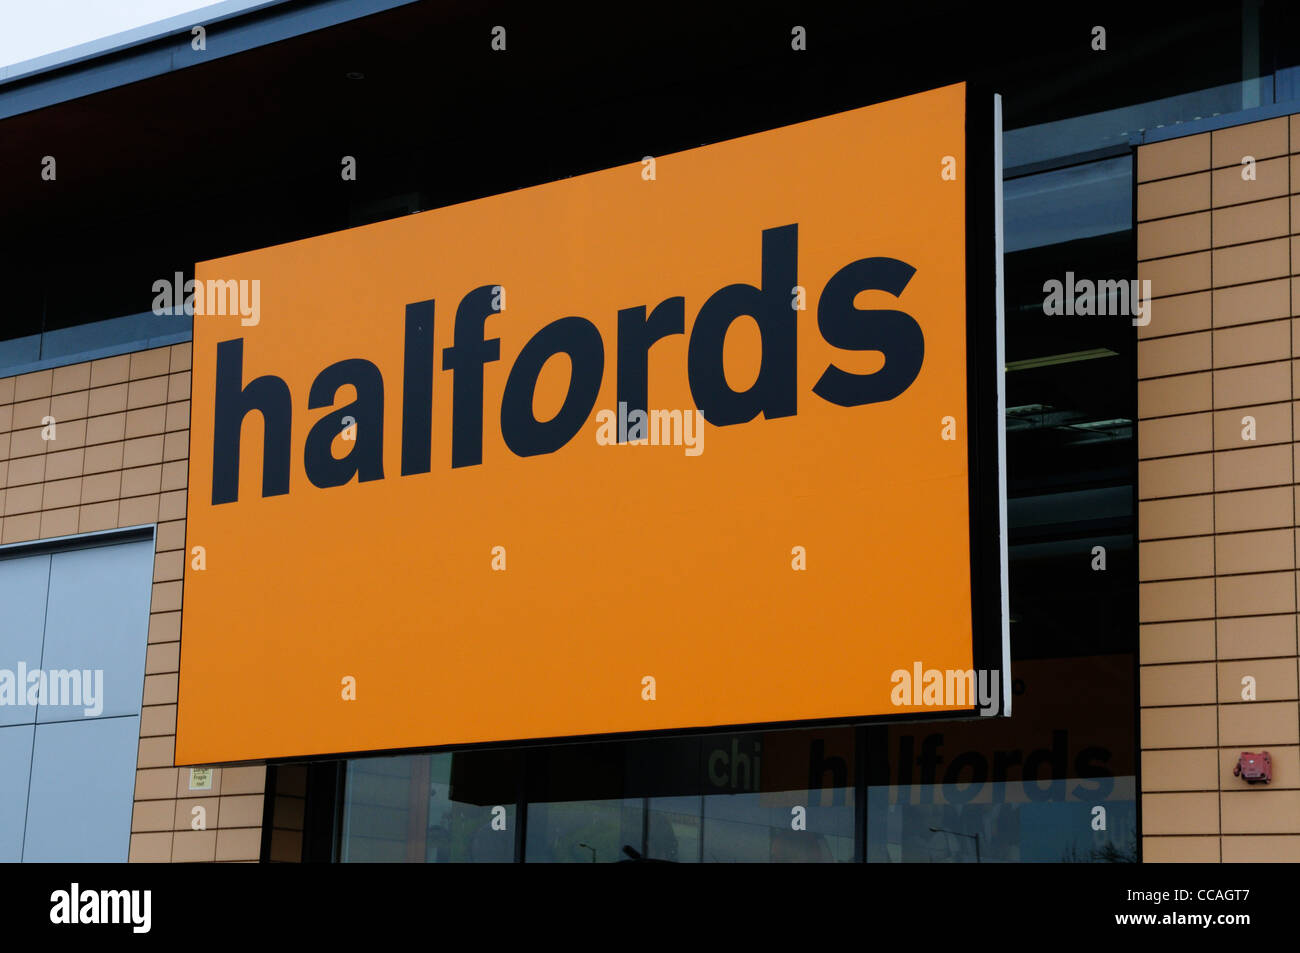 Halfords Motoring Accessories Shop Sign, Cambridge, England, UK Stock Photo